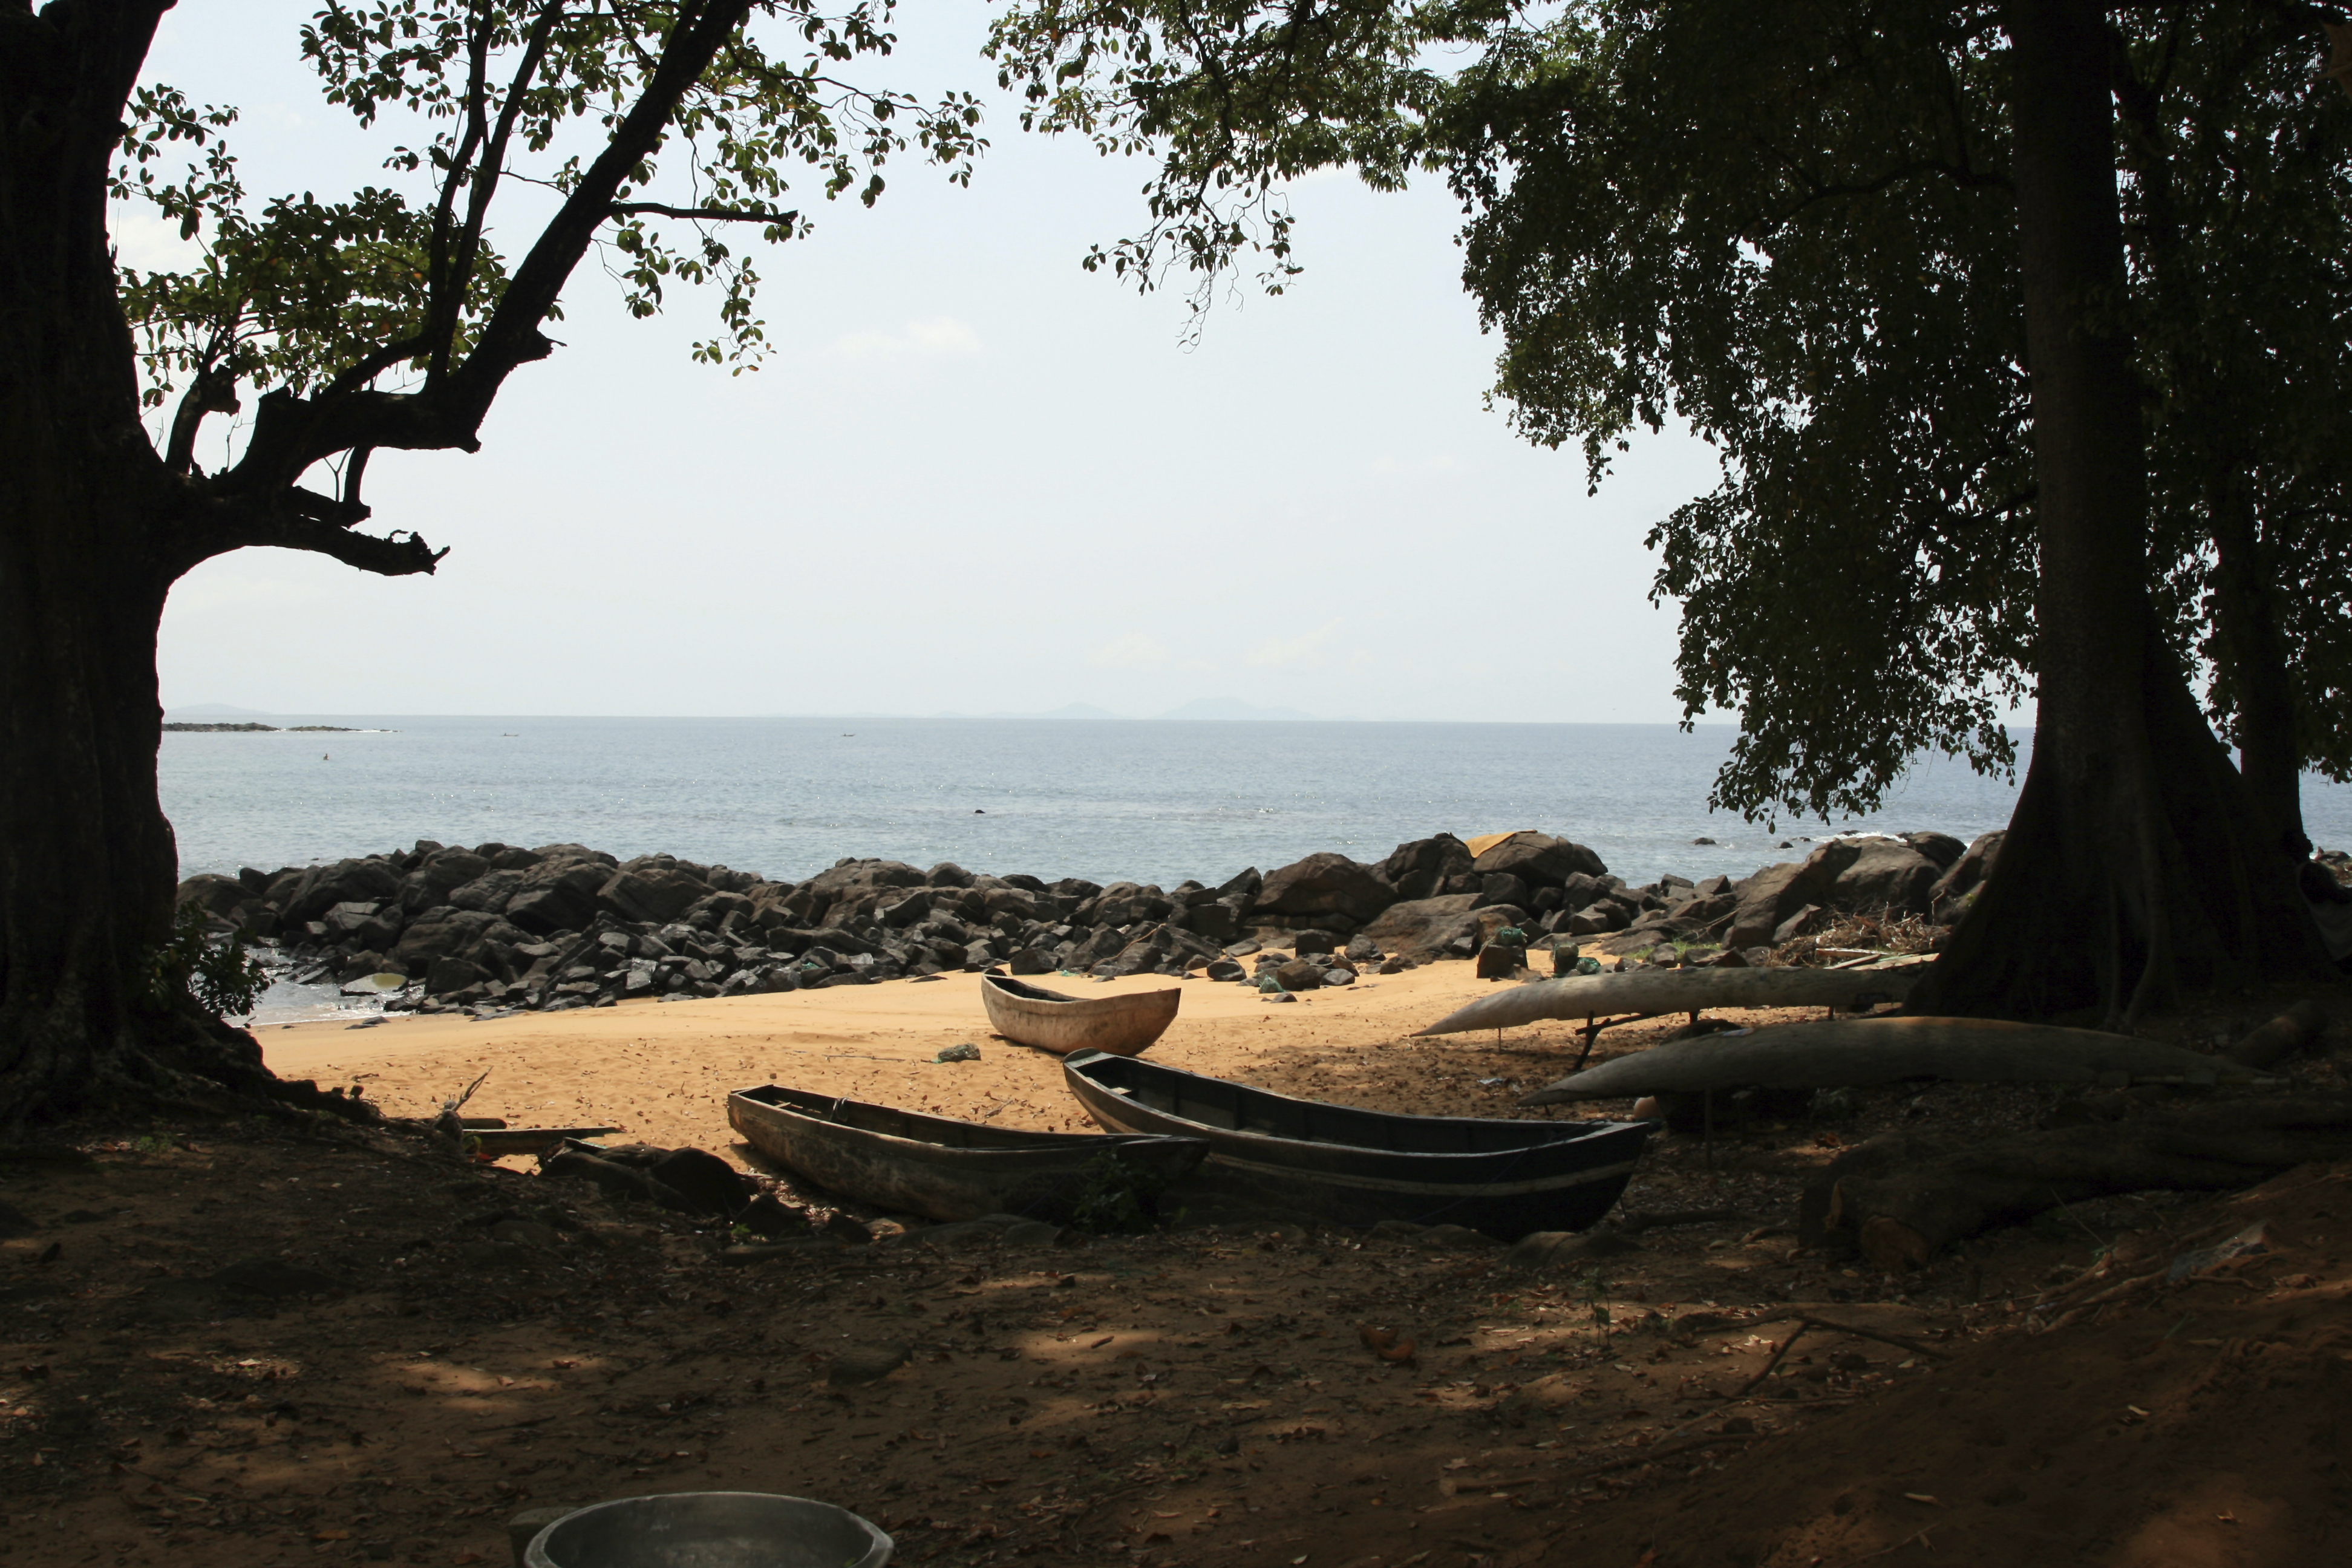 Picturesque coastline in Sierra Leone